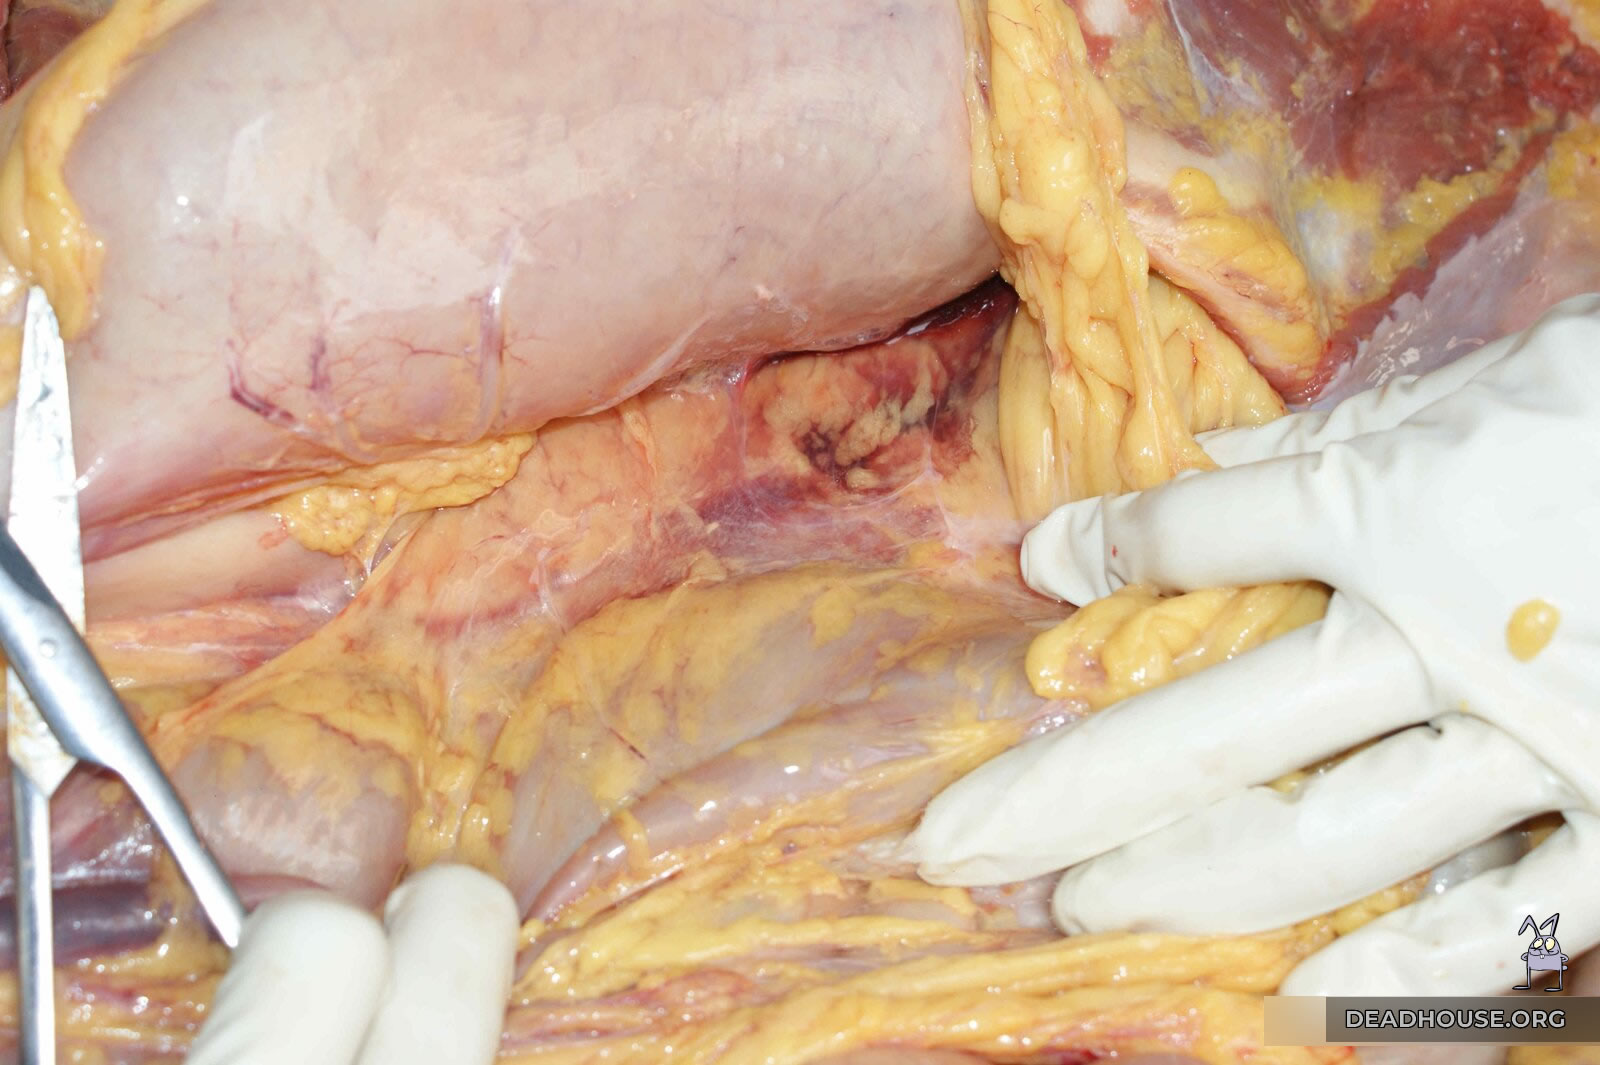 The inside of the abdominal cavity. Hemorrhage